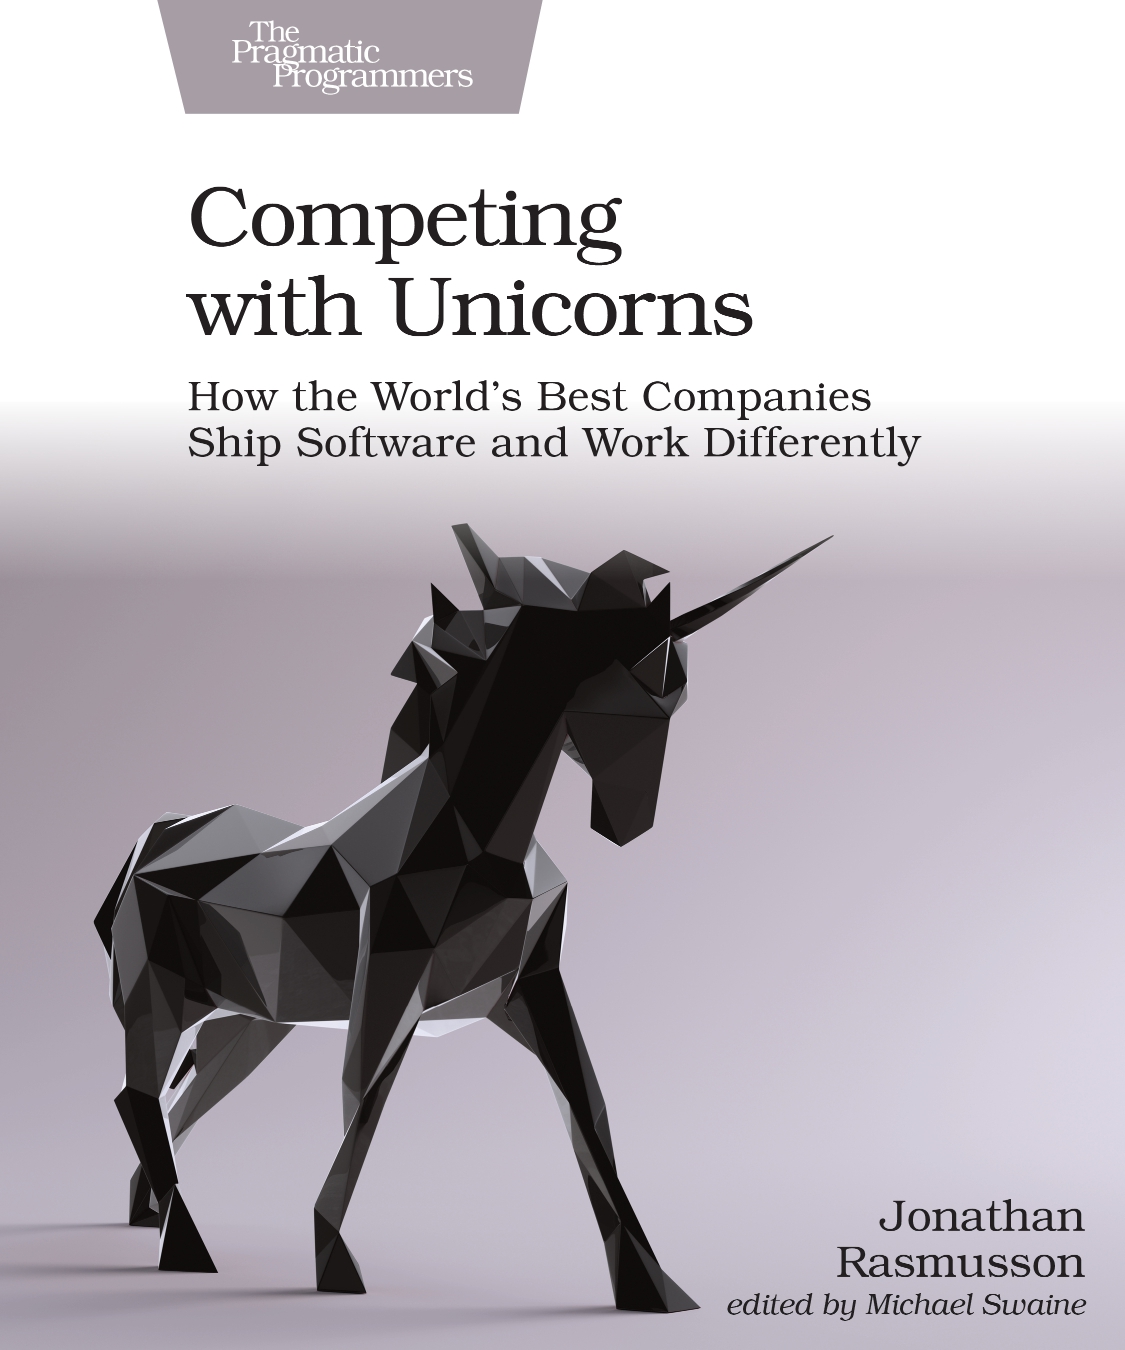 Competing with Unicorns (2020, Pragmatic Programmers, LLC, The)